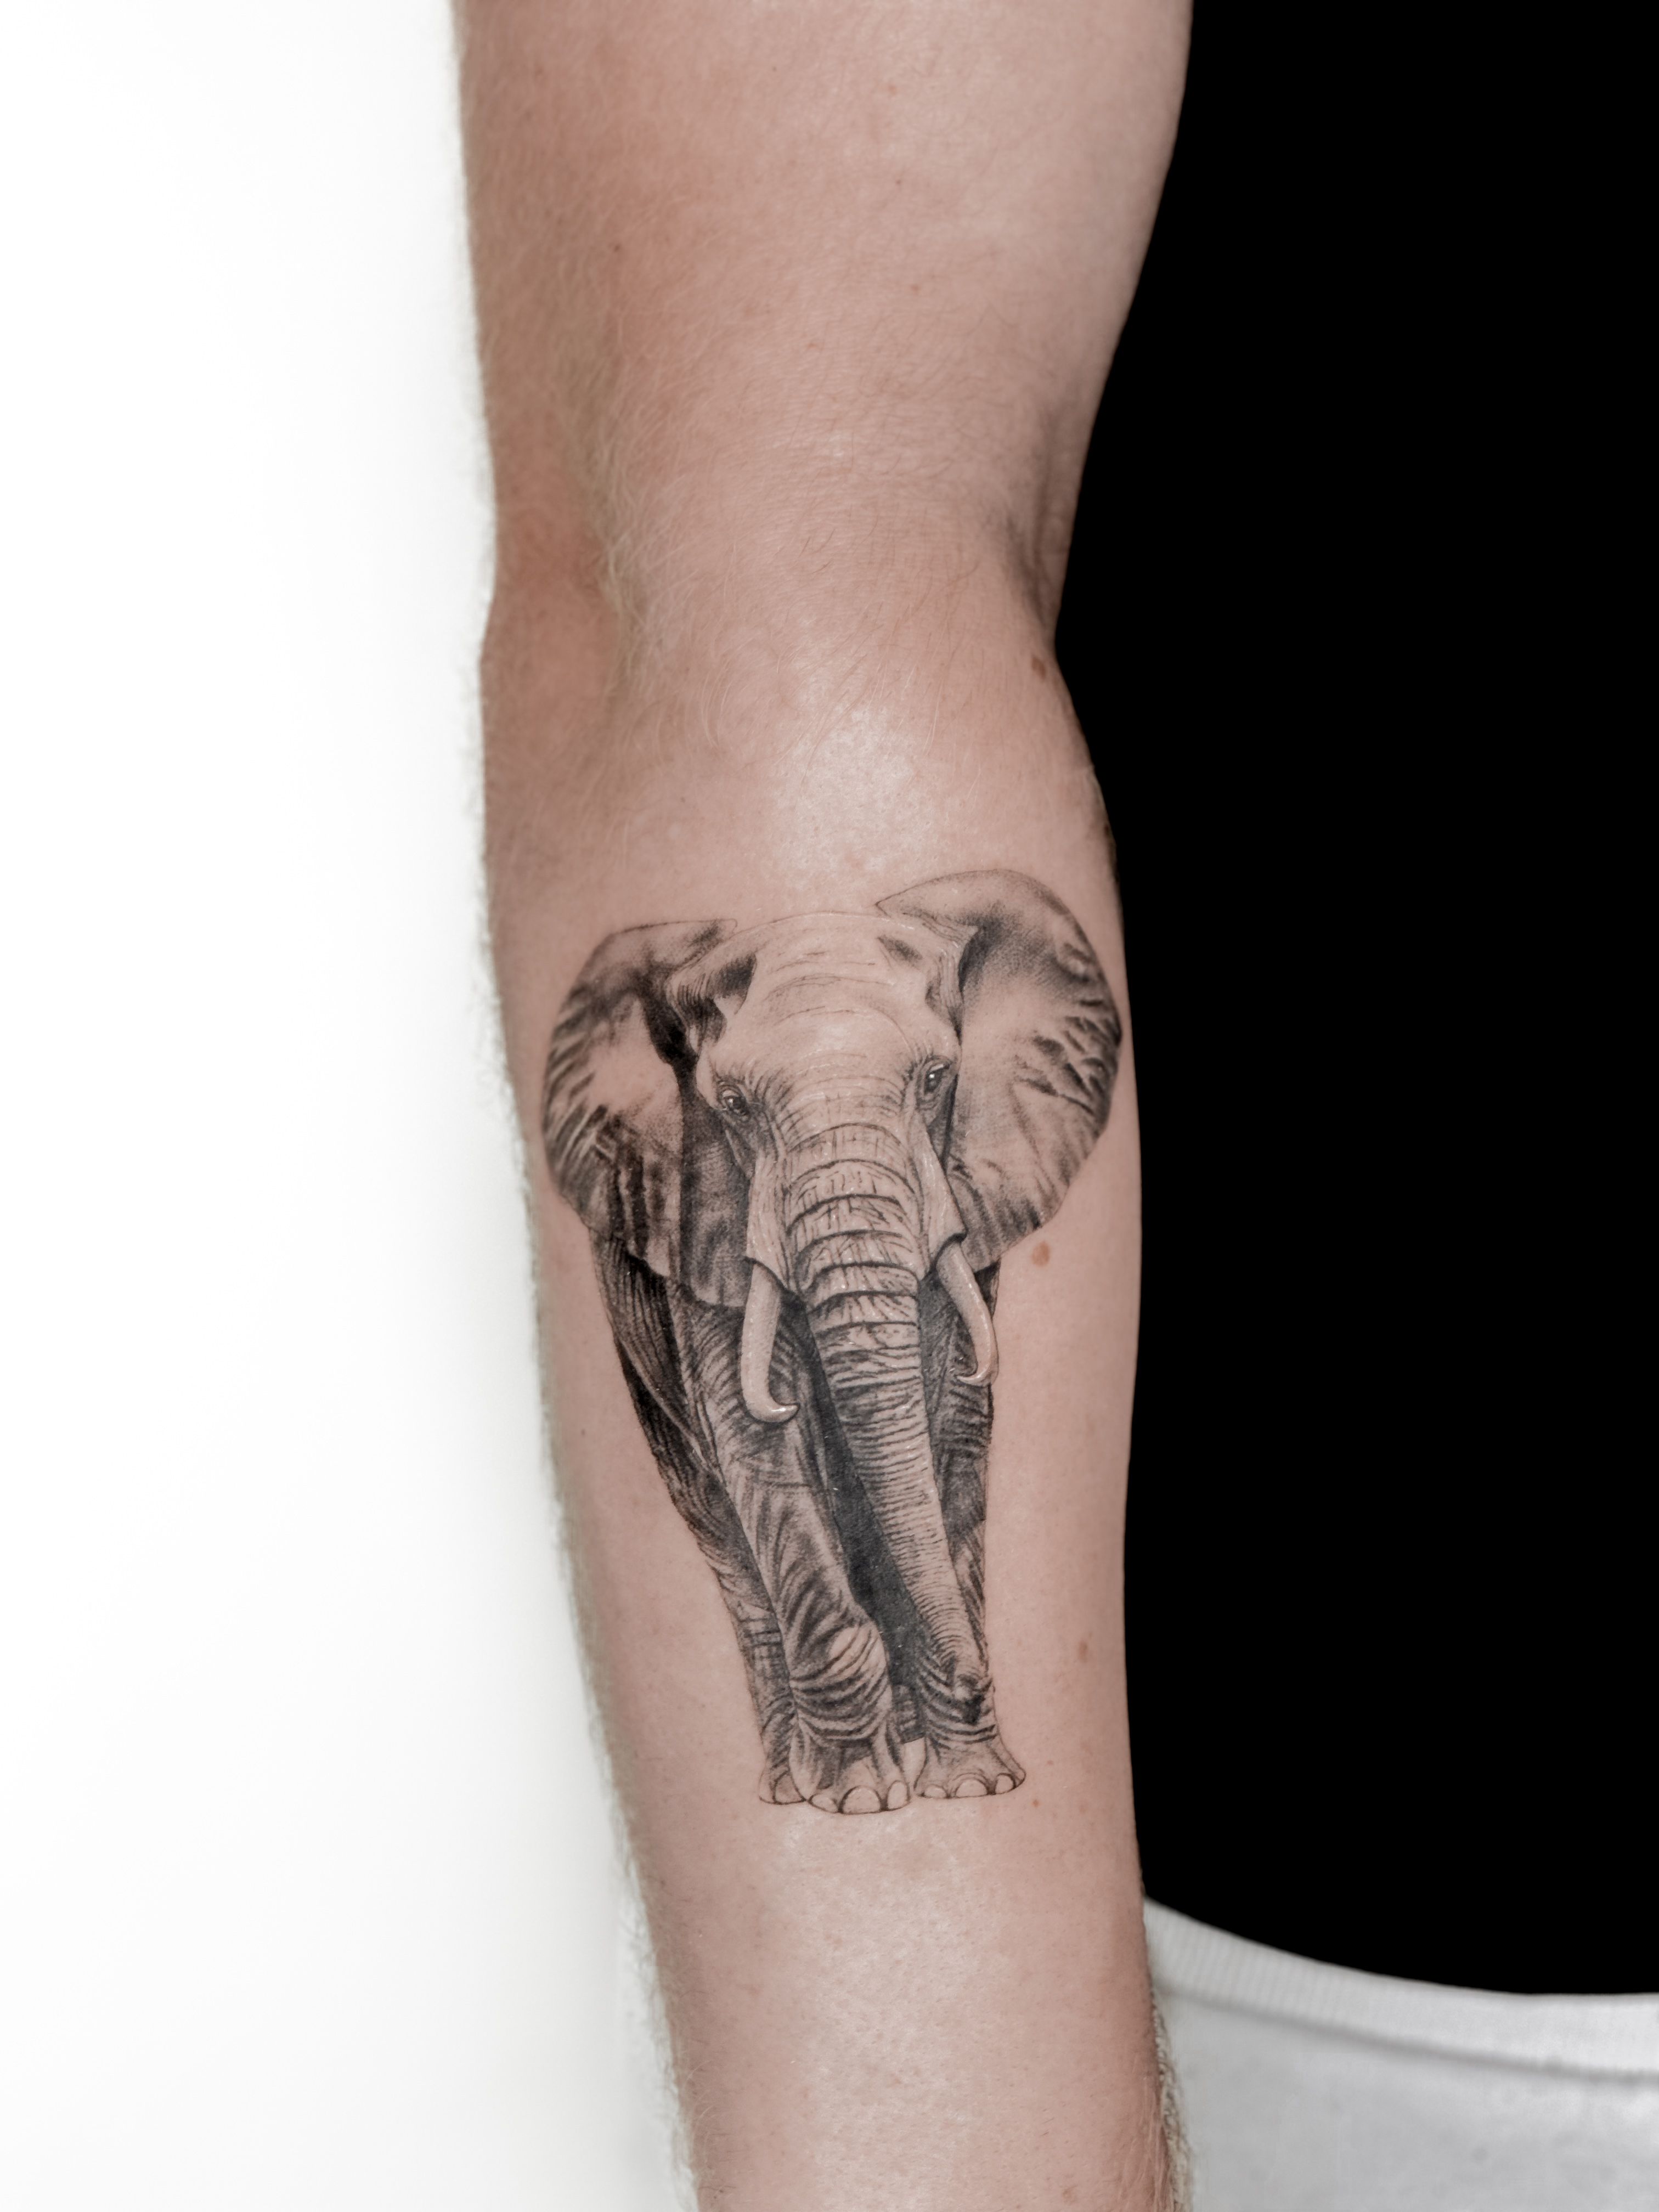 Minimalistic baby elephant tattoo done at xpose tattoos jaipur